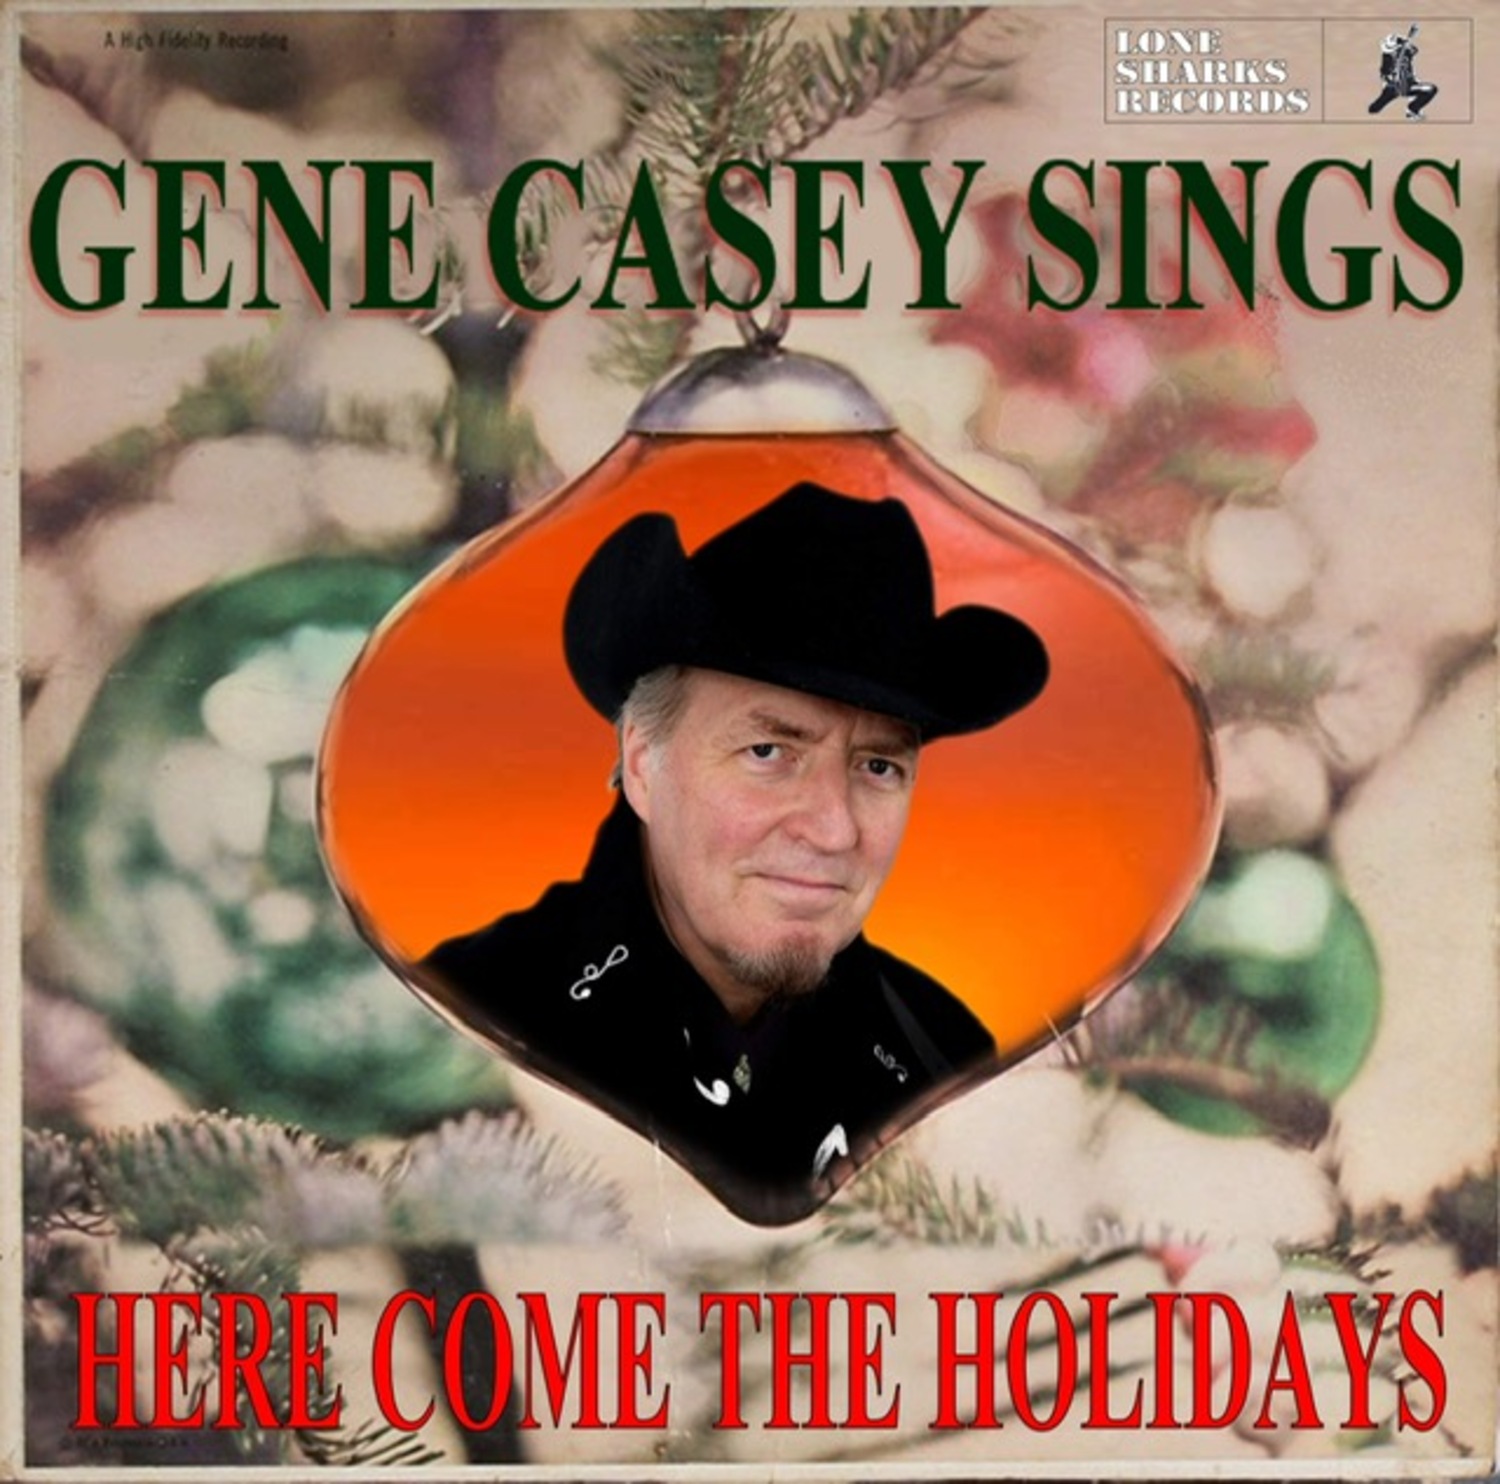 Gene Casey's single 